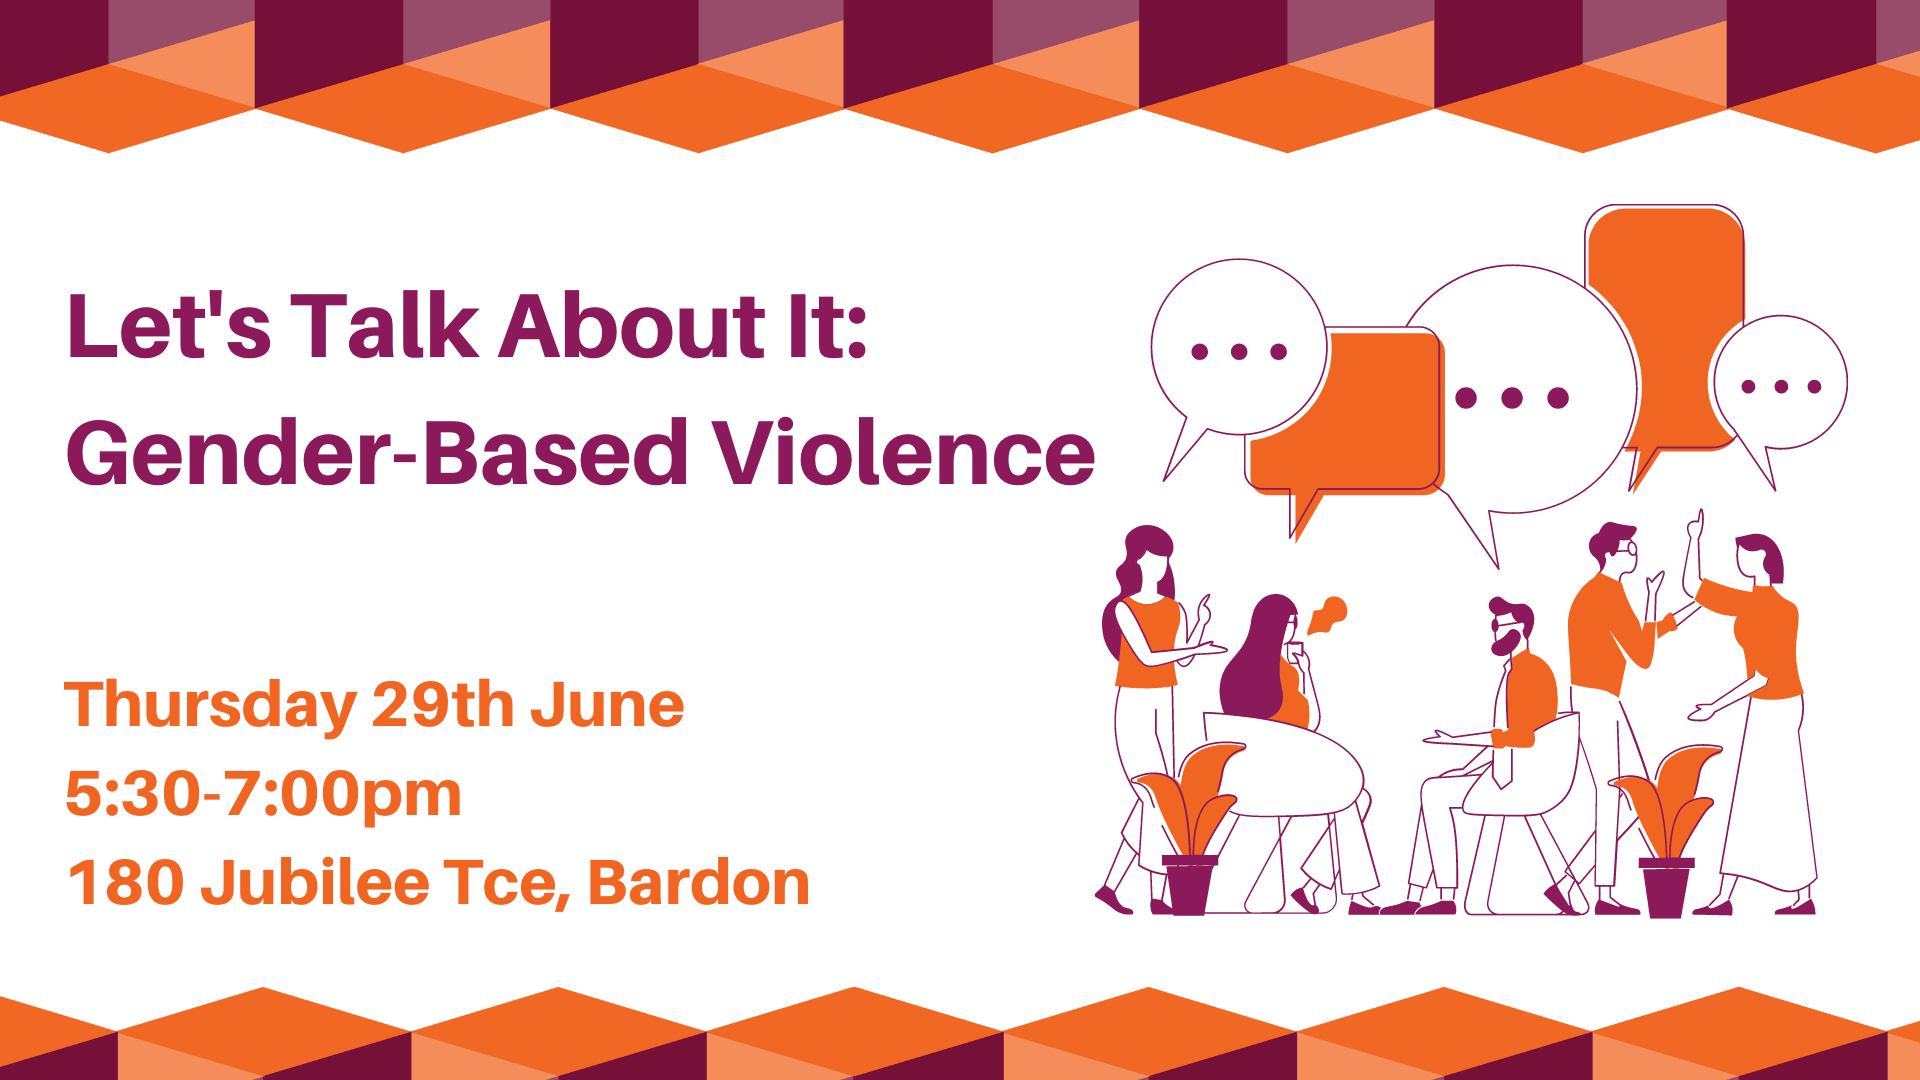 Let's talk about it: Gender-based violence. Thursday 29th June 5:30pm until 7pm